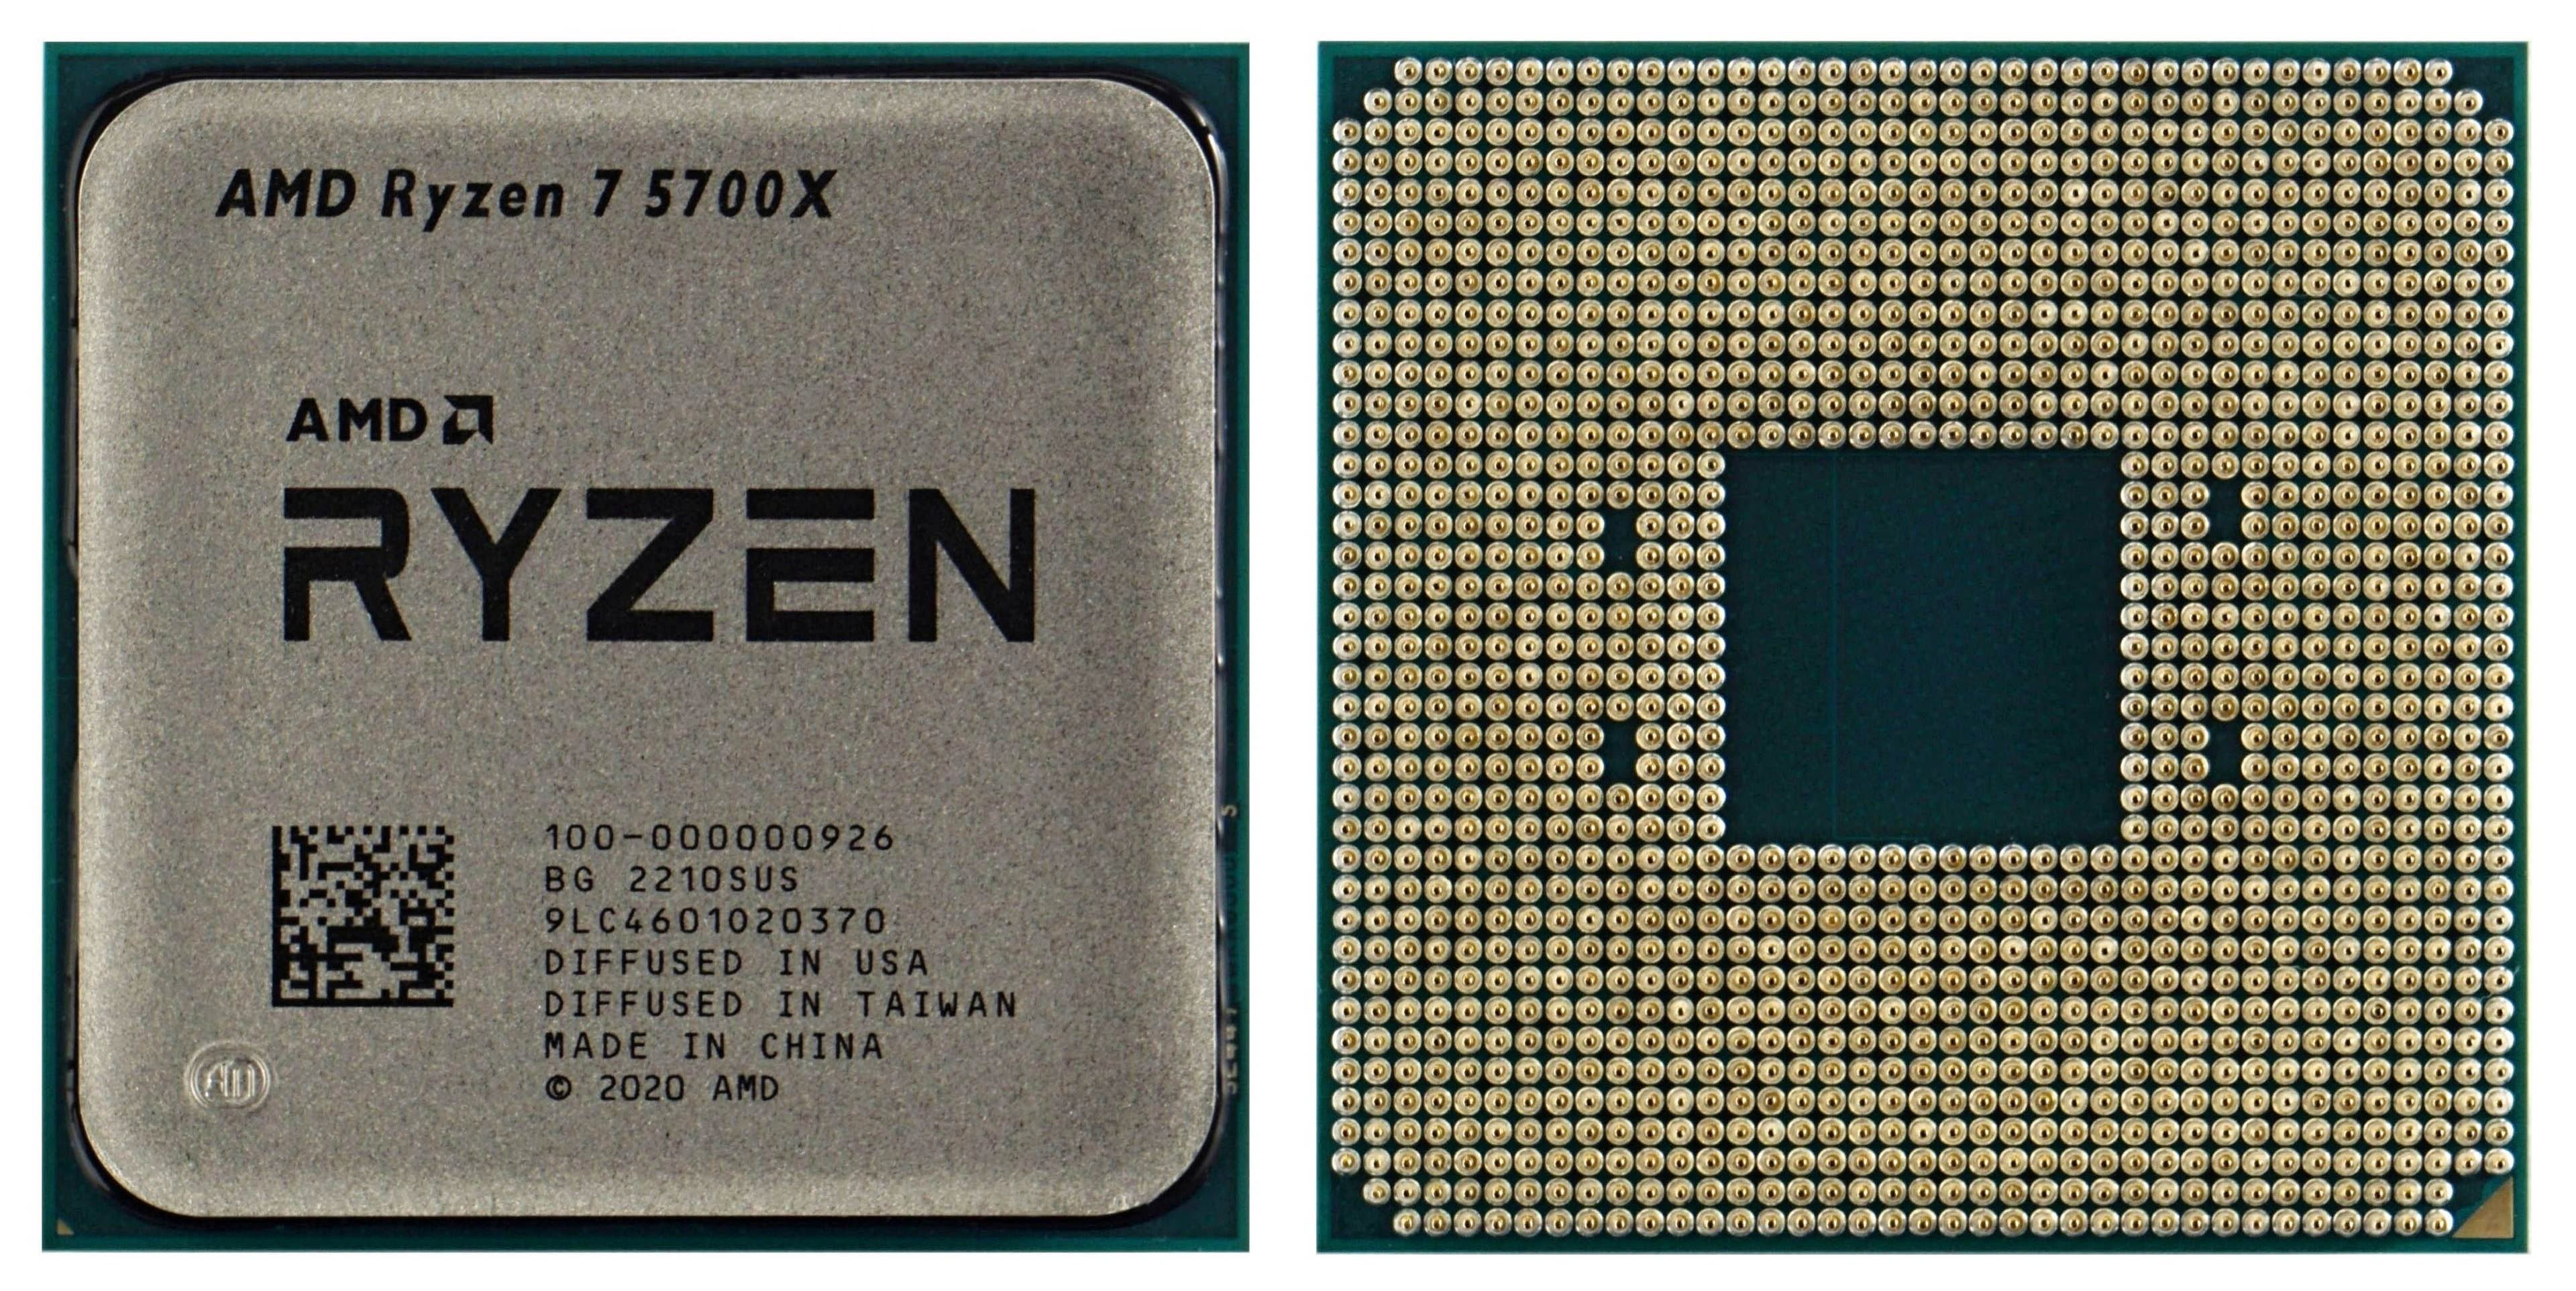 AMD Ryzen 7 5700X: A much more efficient CPU than the 5800X